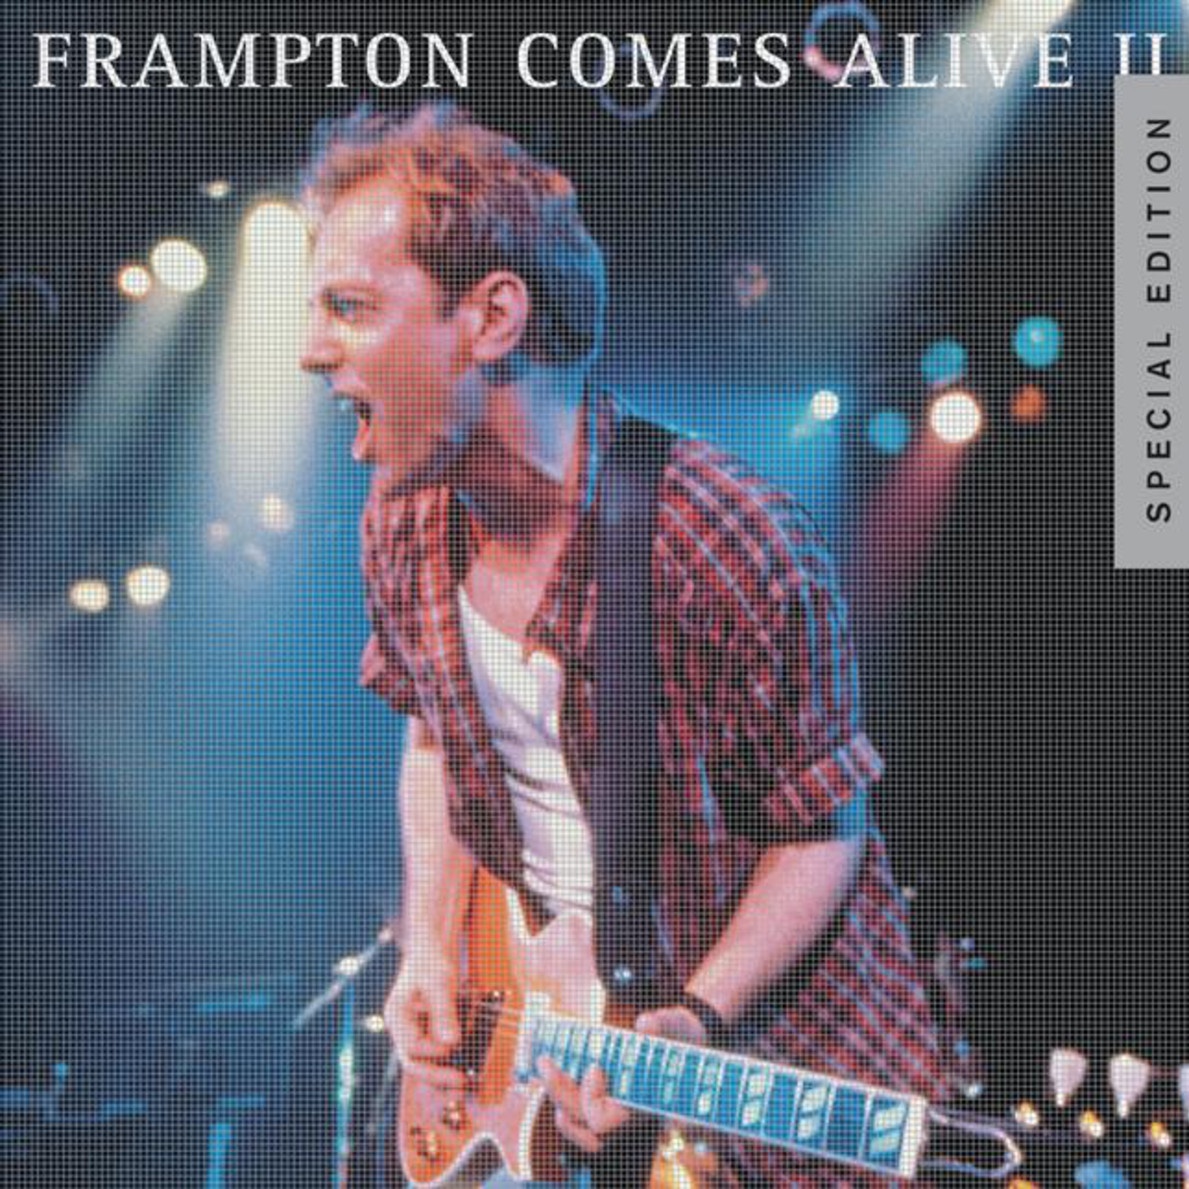 Frampton Comes Alive II